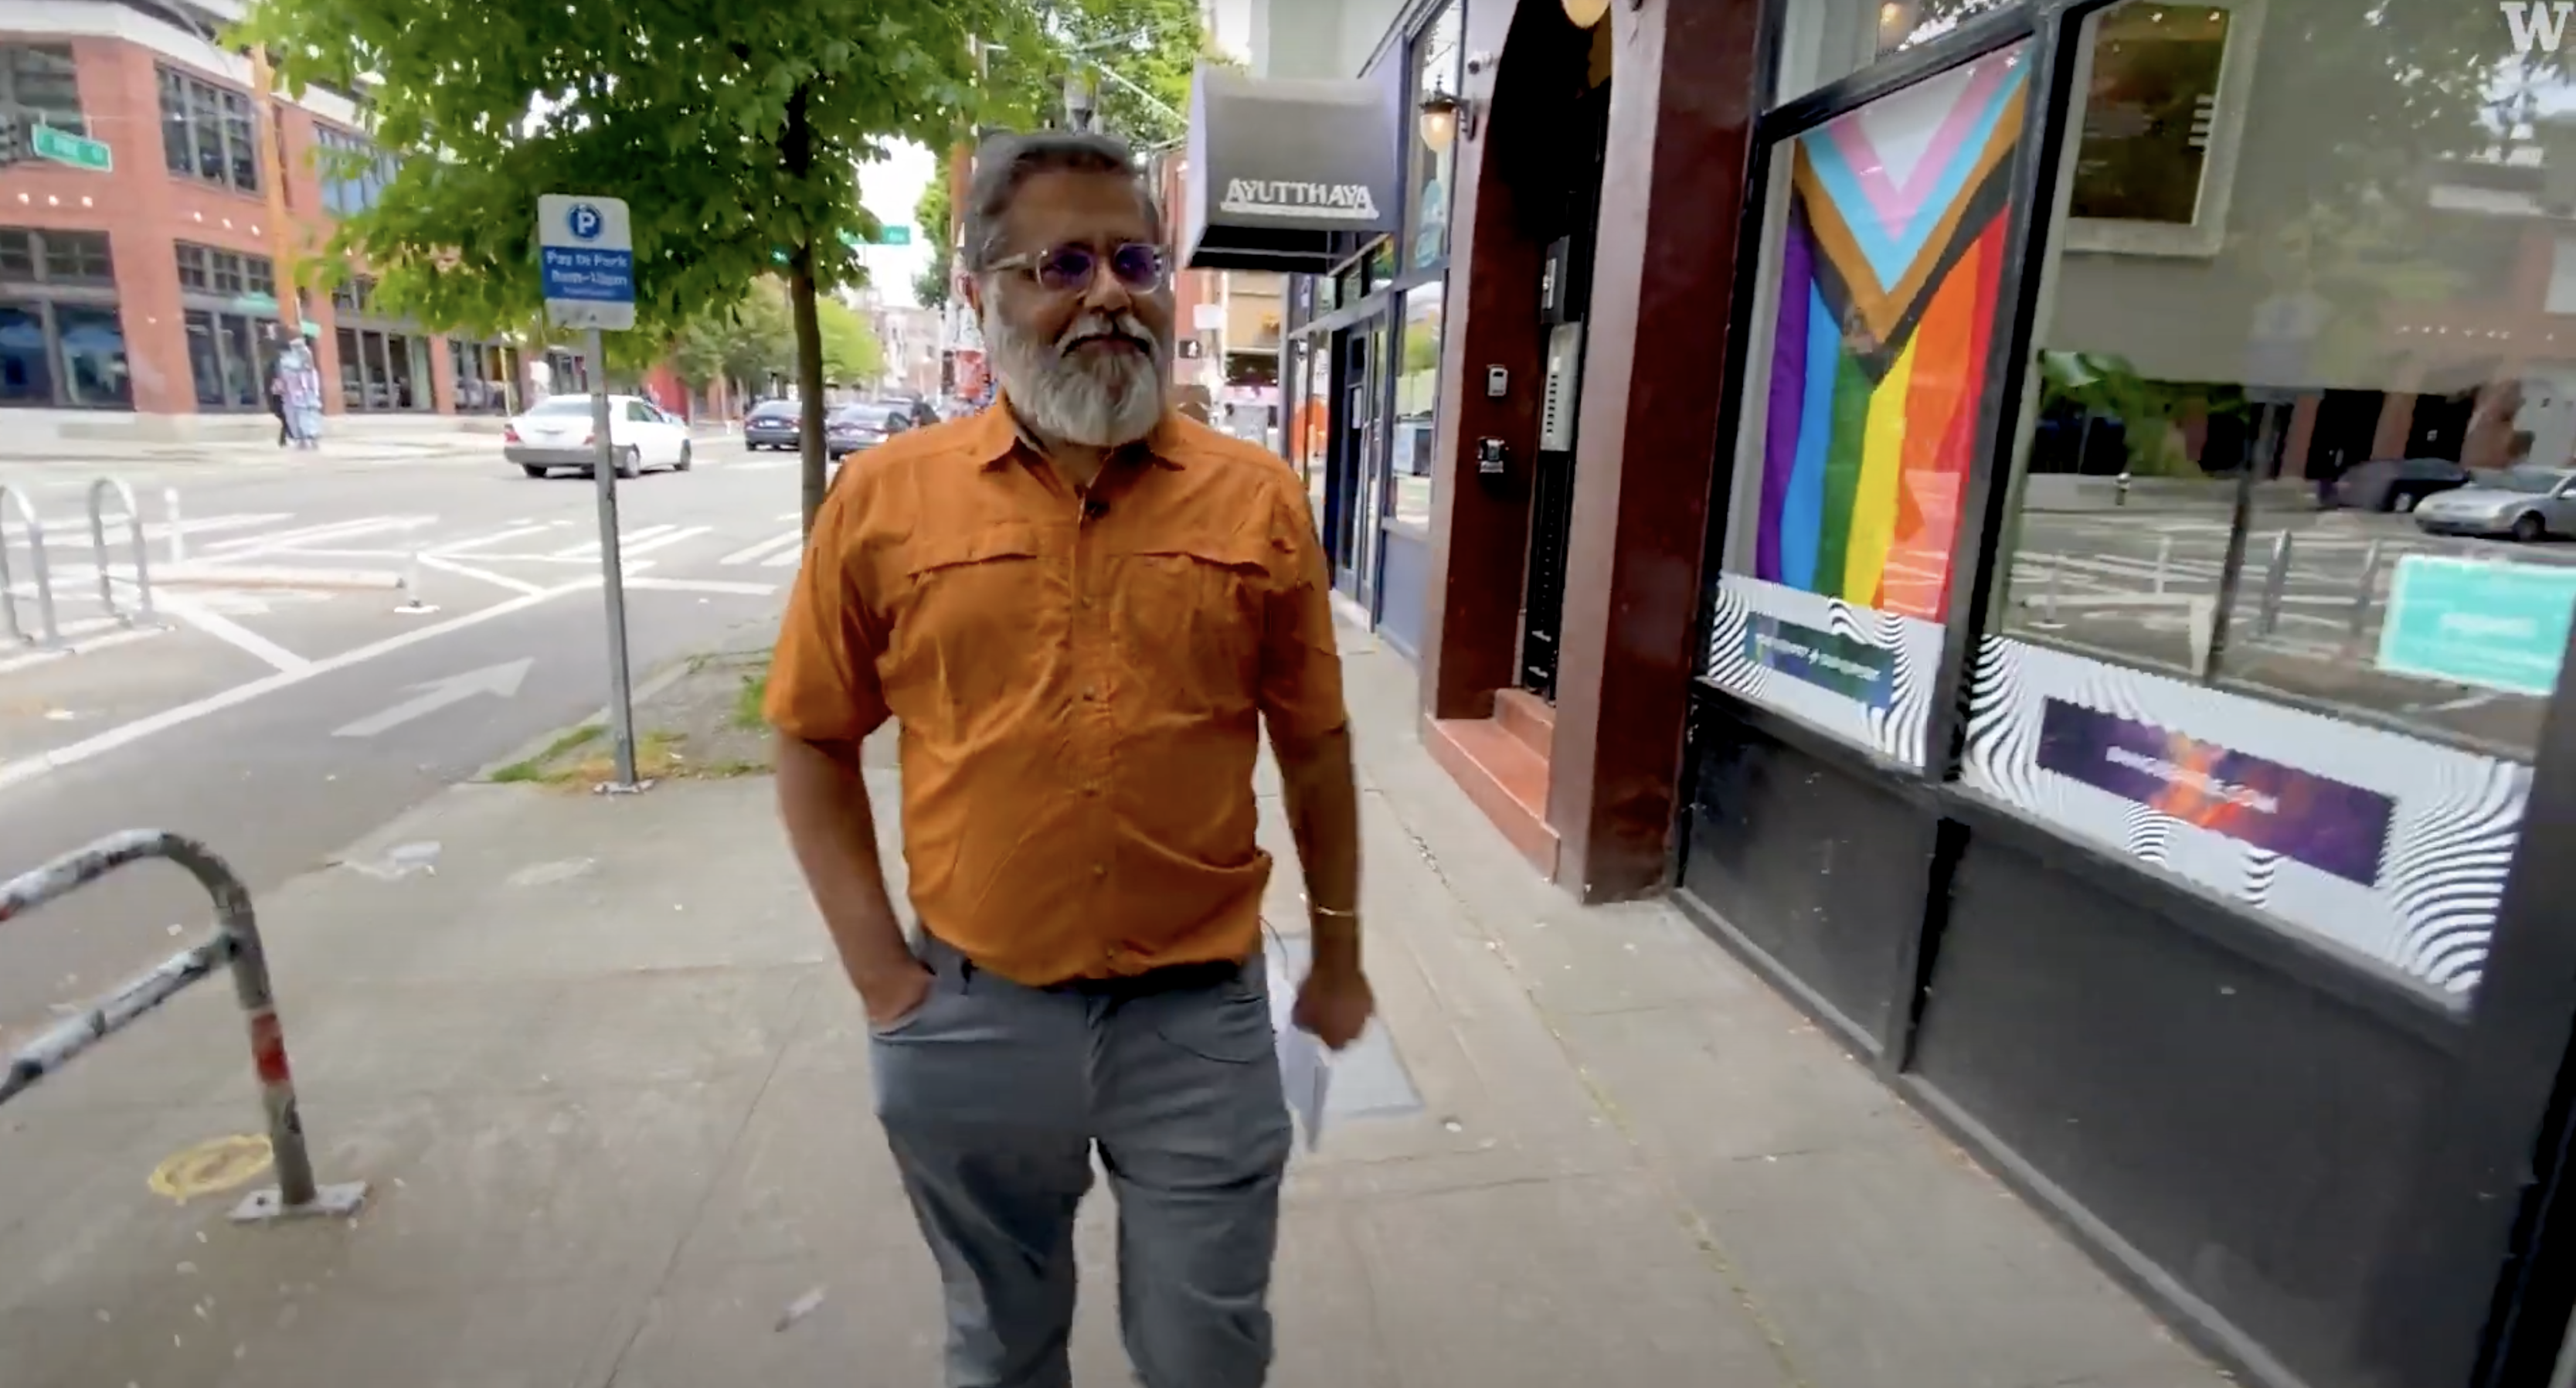 Ahead of Pride, UW’s Manish Chalana describes the changing neighborhood of Capitol Hill